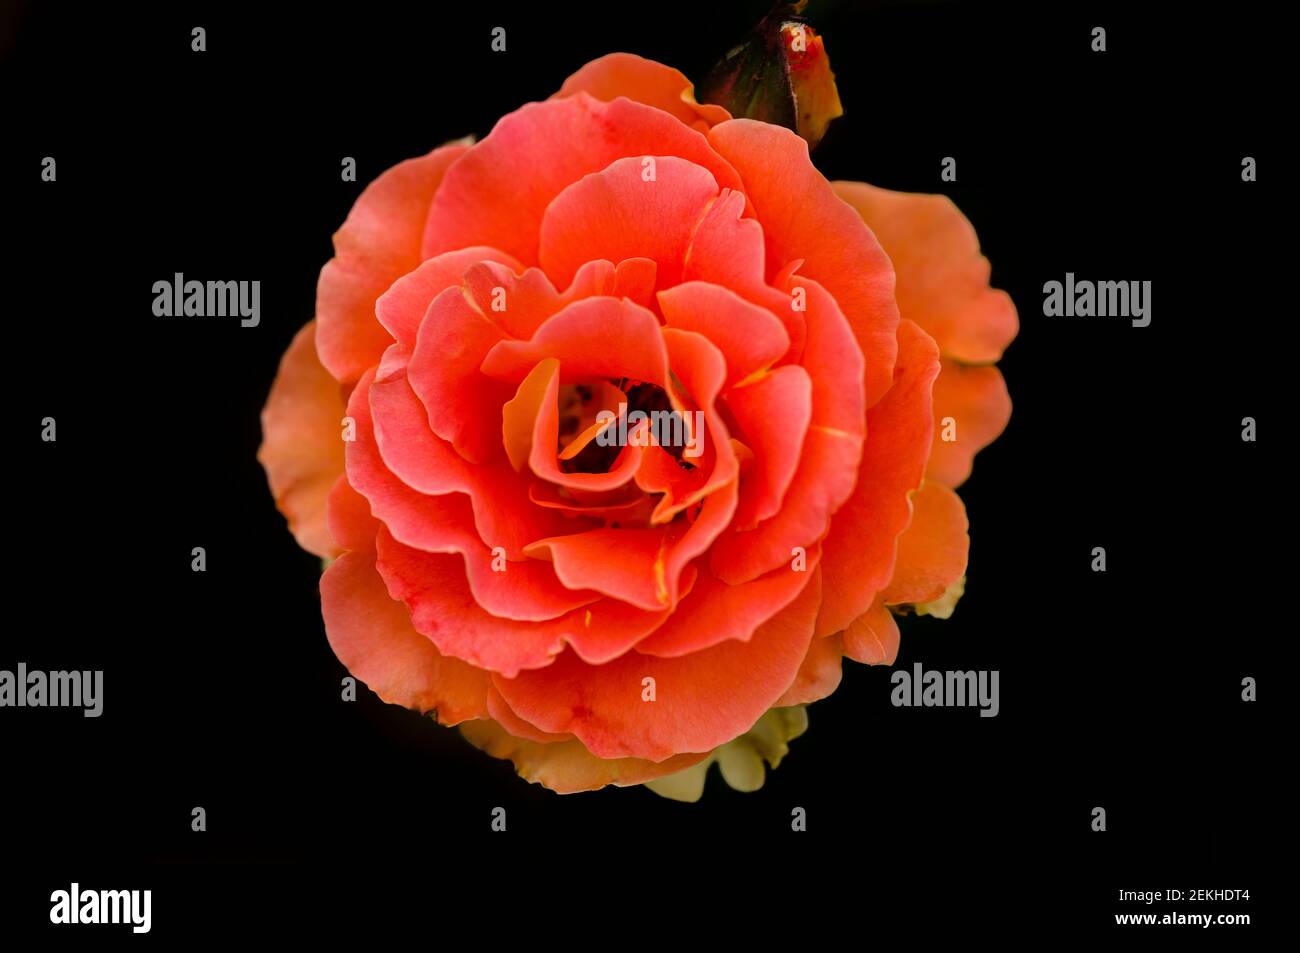 Orange rose flower head in black background Stock Photo